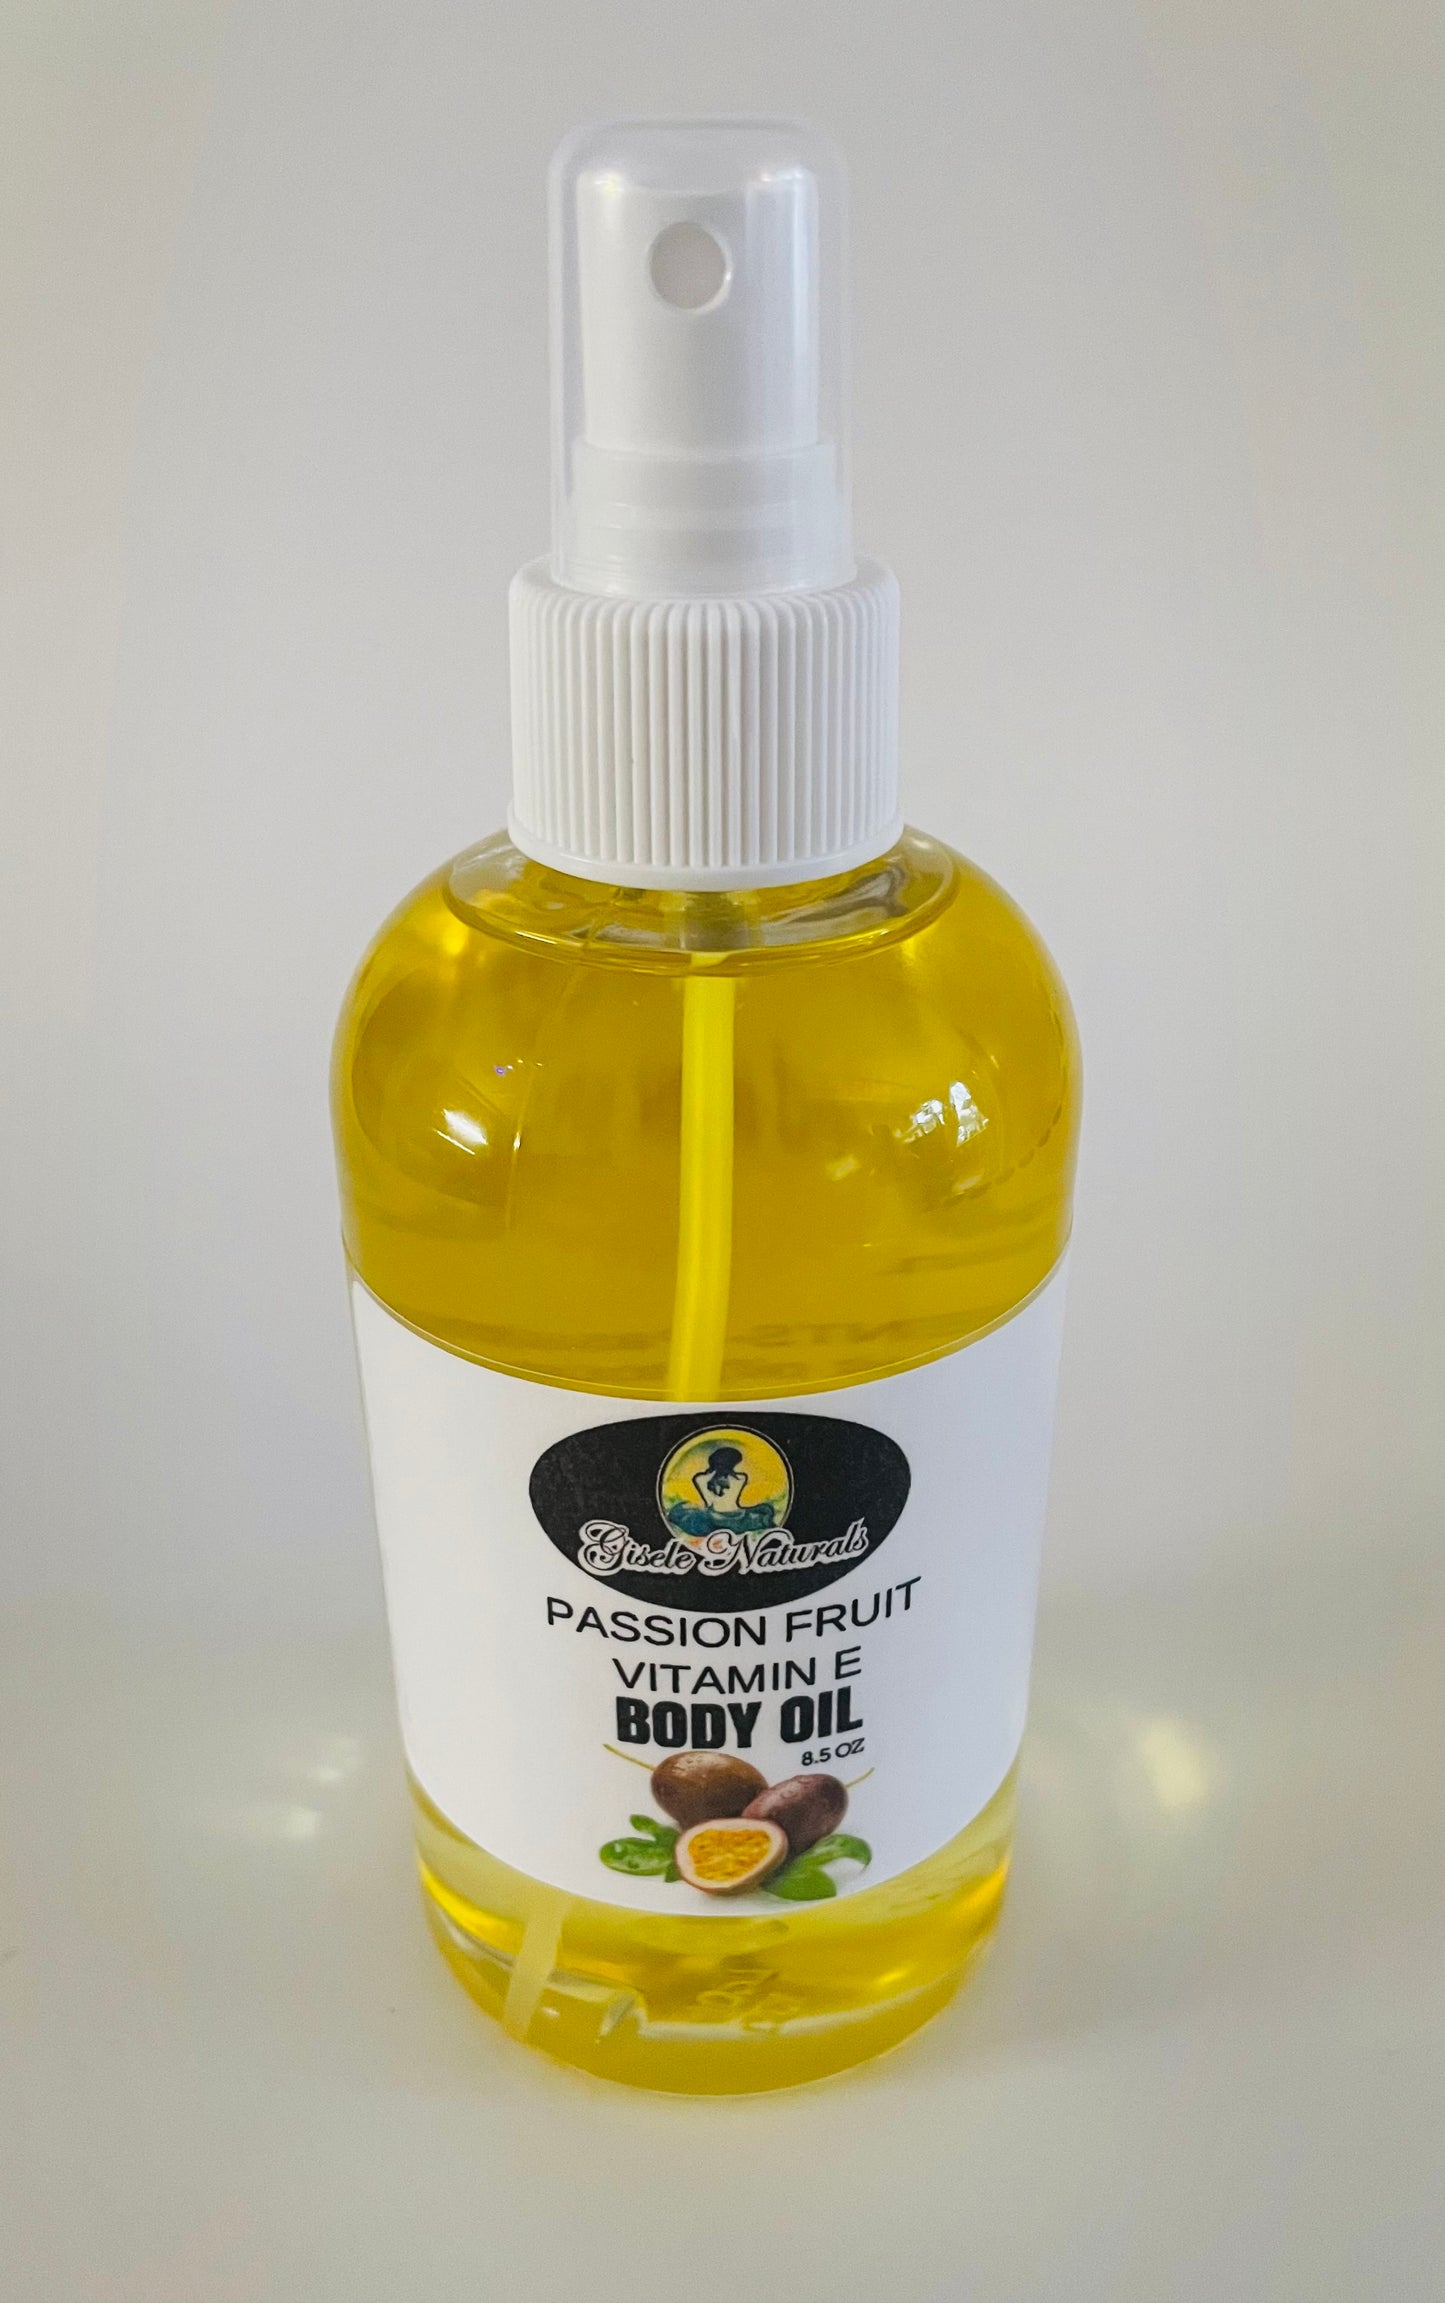 Passion fruit body oil